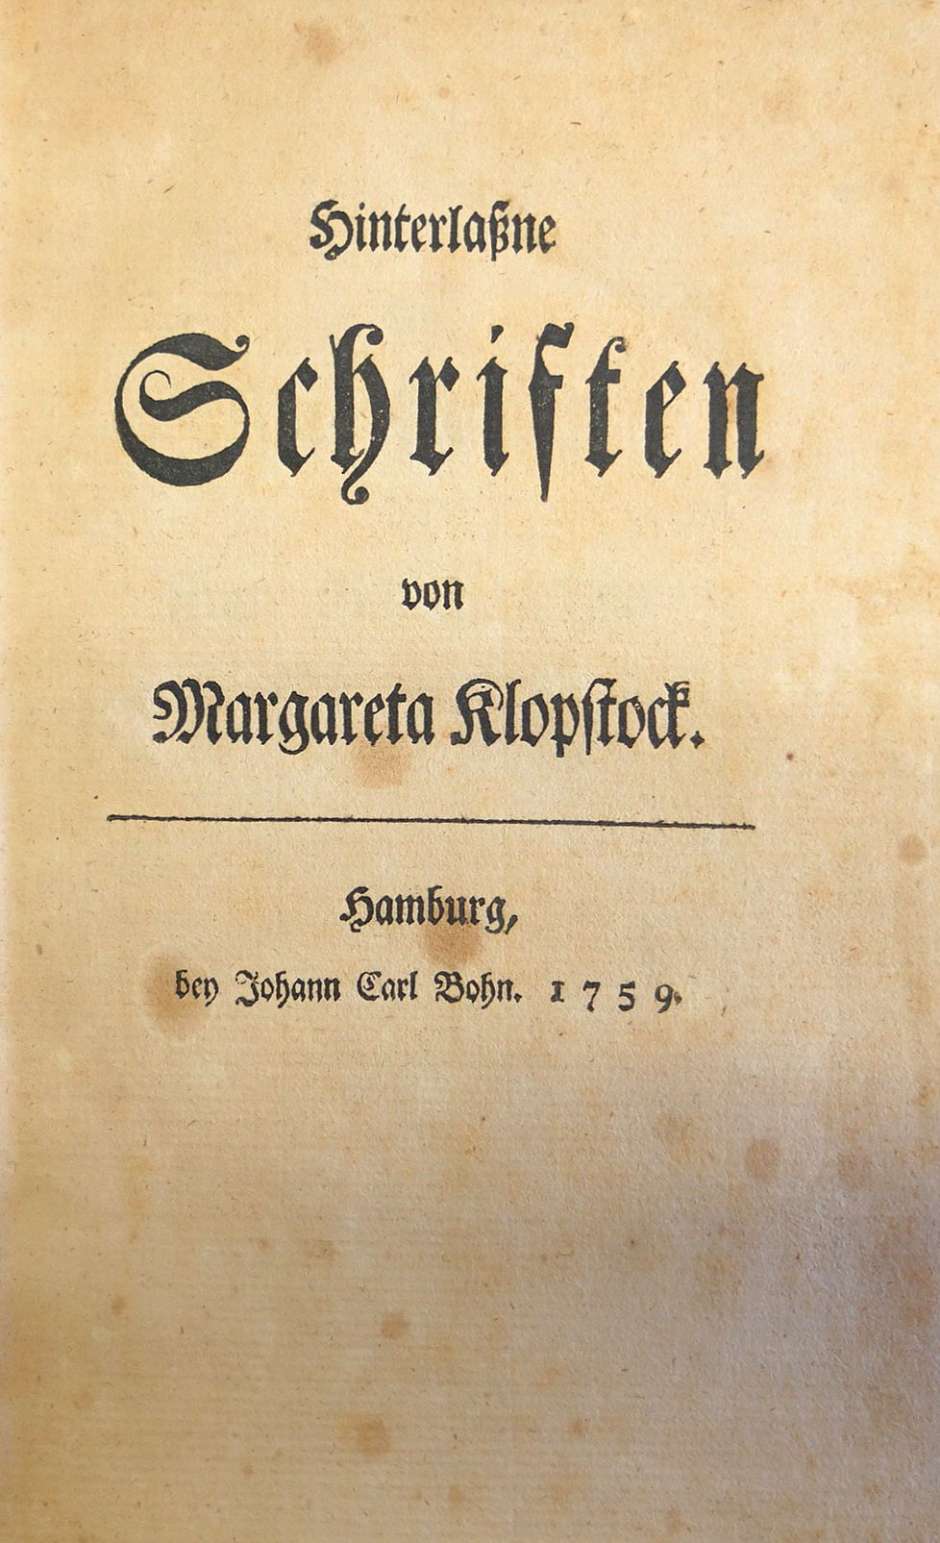 Lot 2100, Auction  115, Klopstock, Margareta, Hinterlaßne Schriften